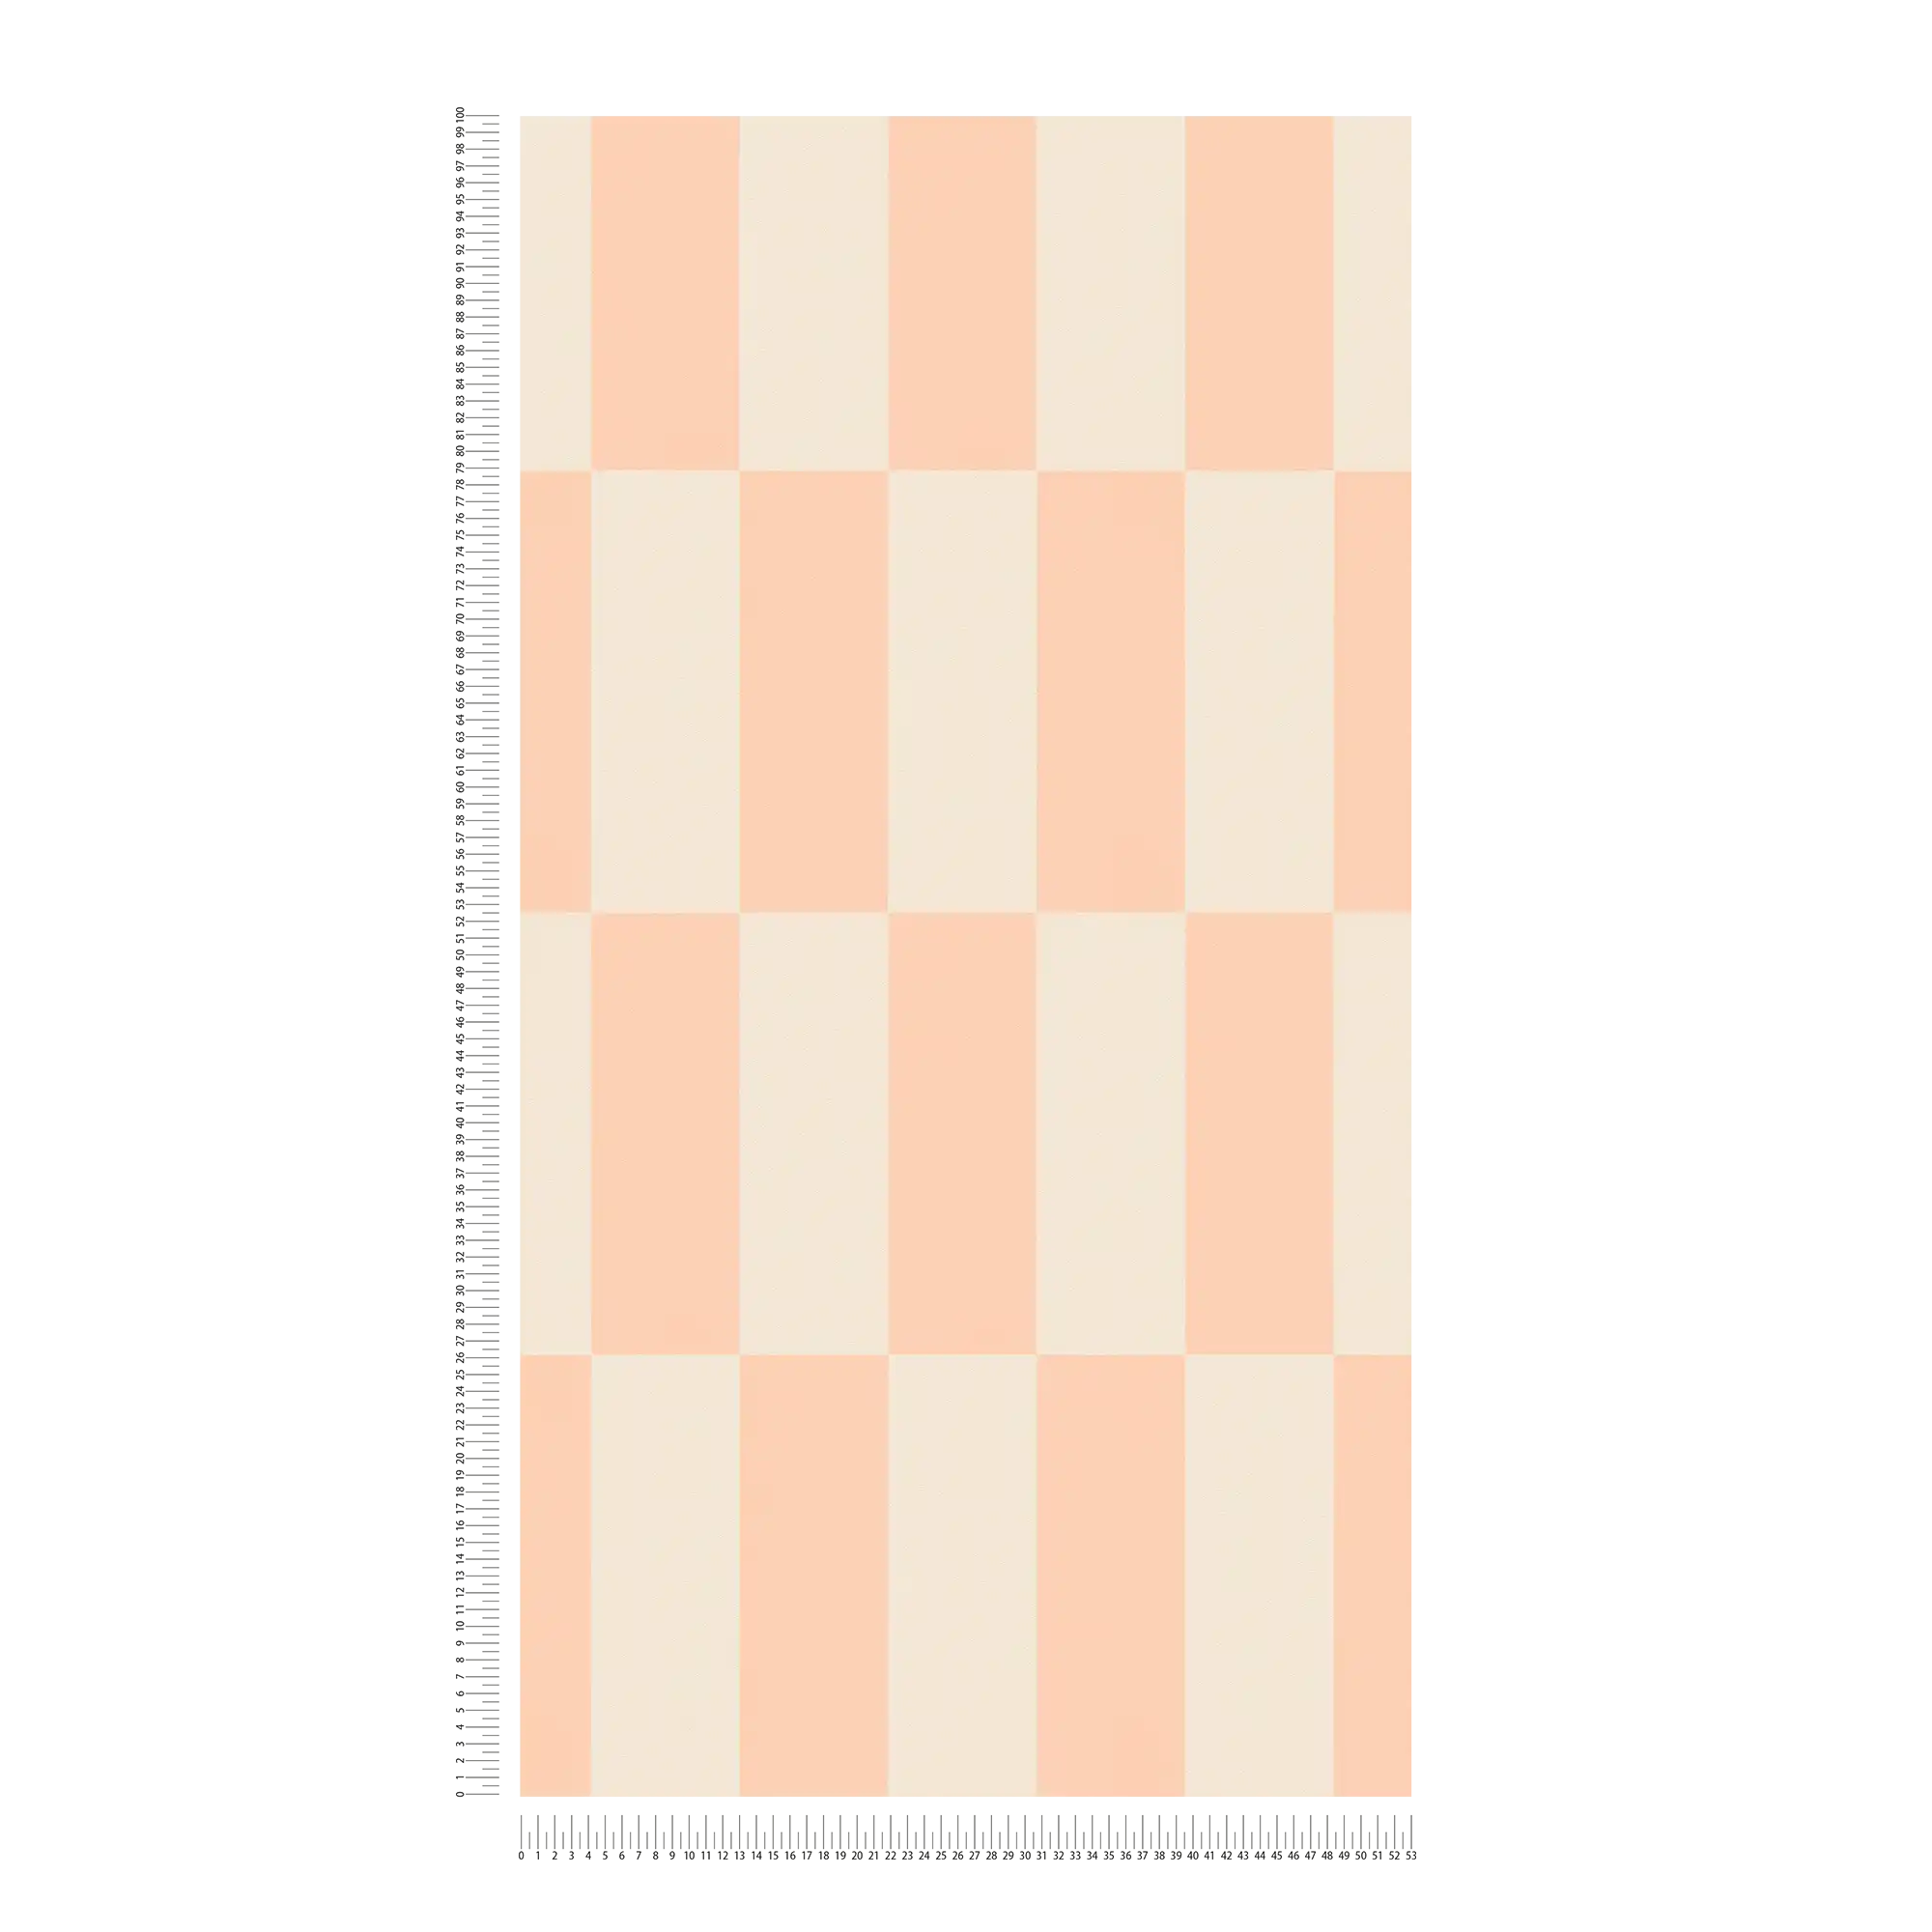             Papel pintado no tejido con motivo gráfico rectangular - crema, rosa
        